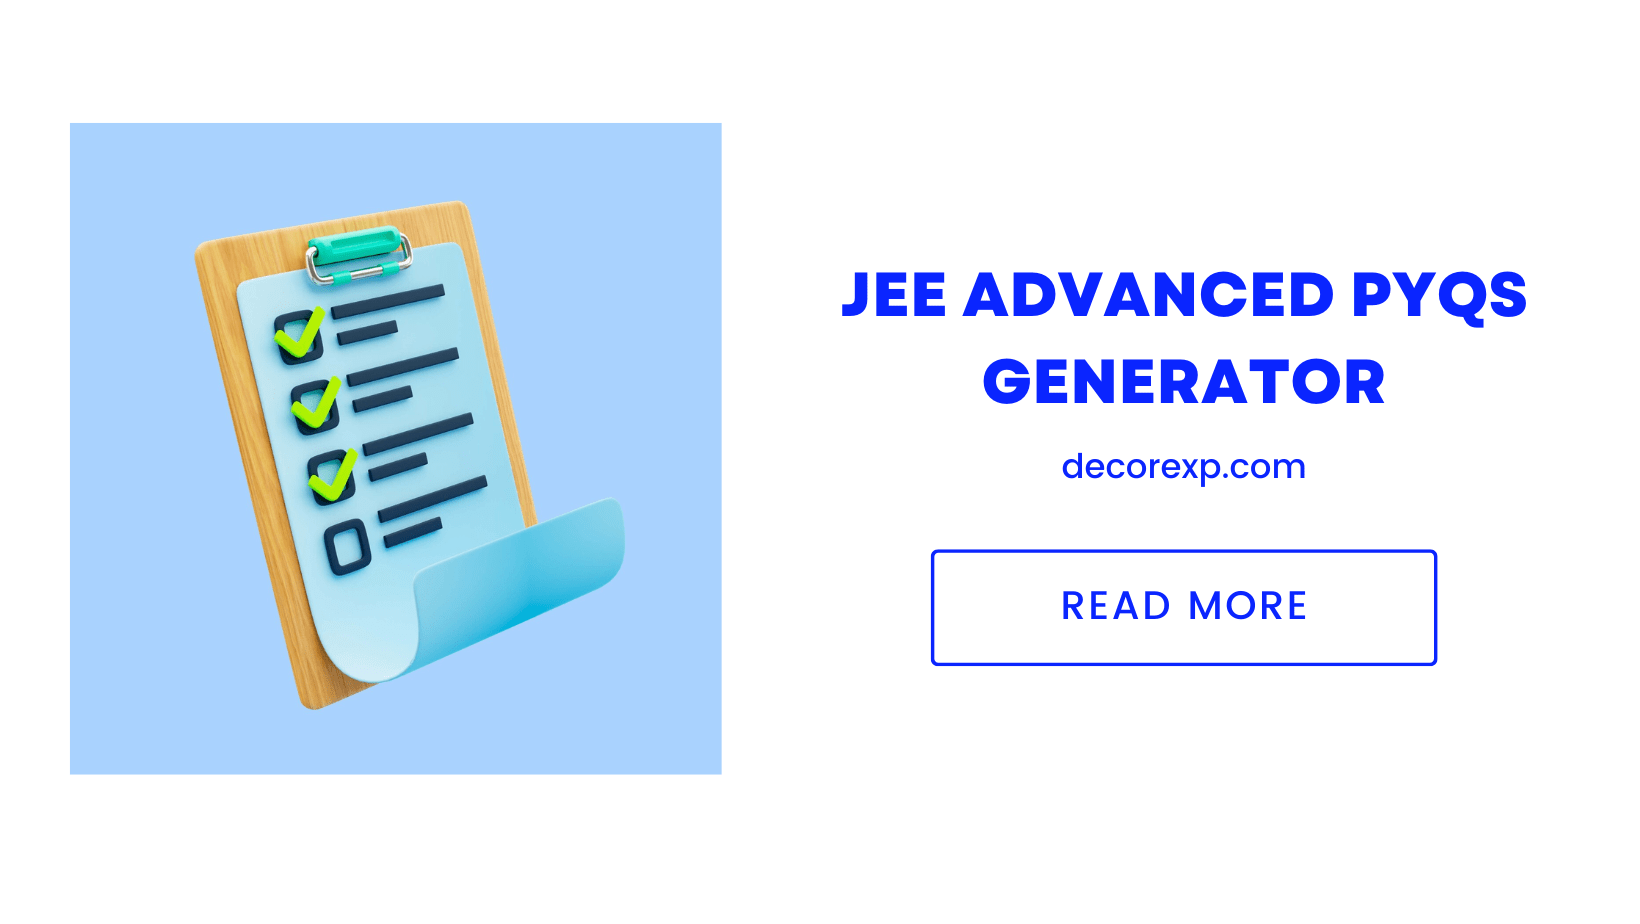 JEE Advanced PYQ Generator